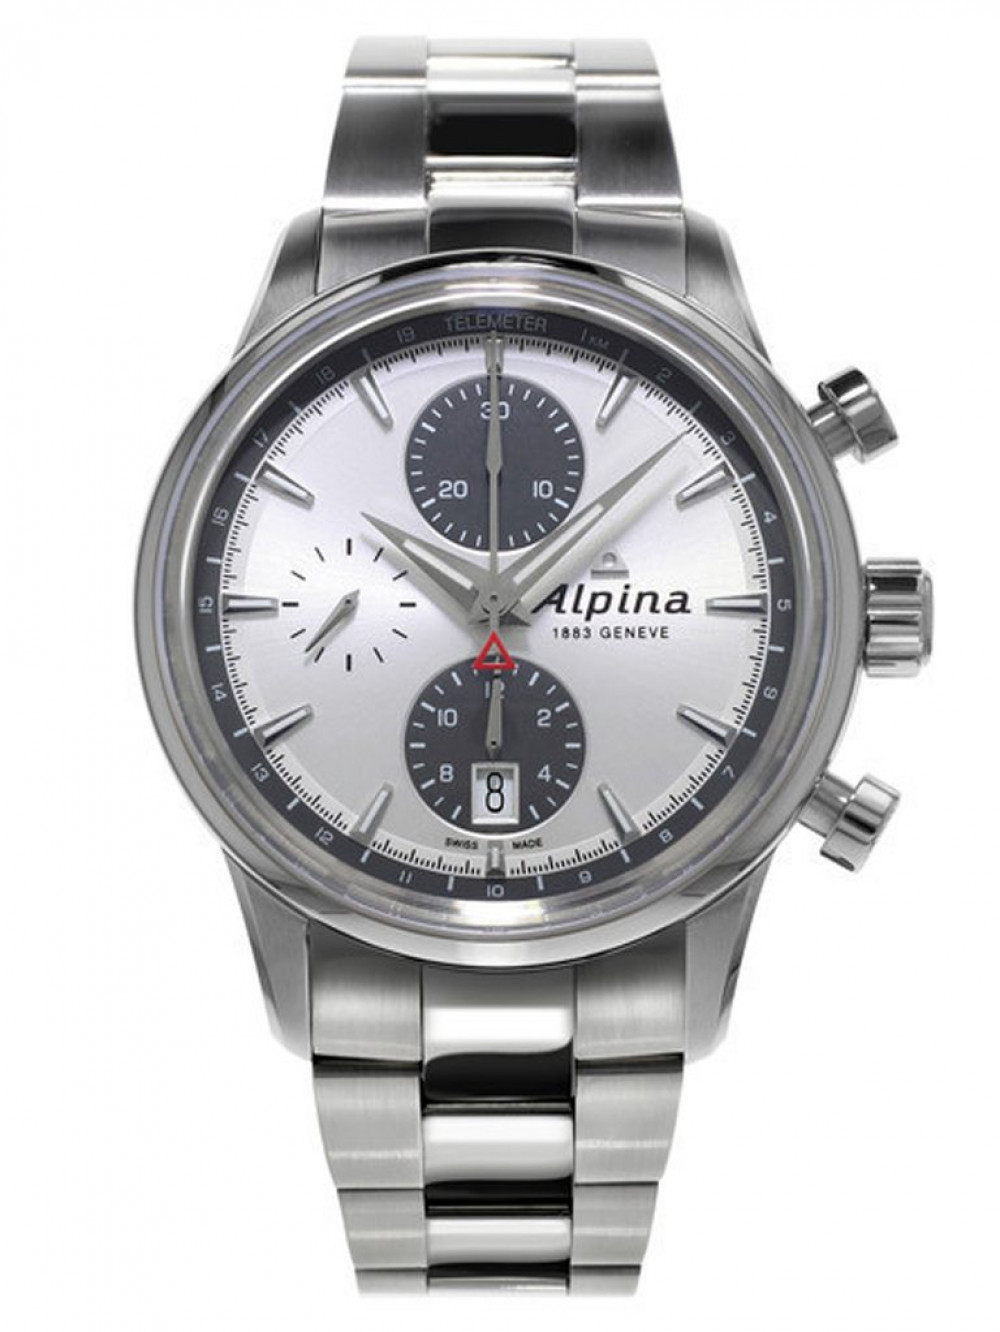 Zegarek firmy Alpina Genève, model Alpiner Automatic Chronograph